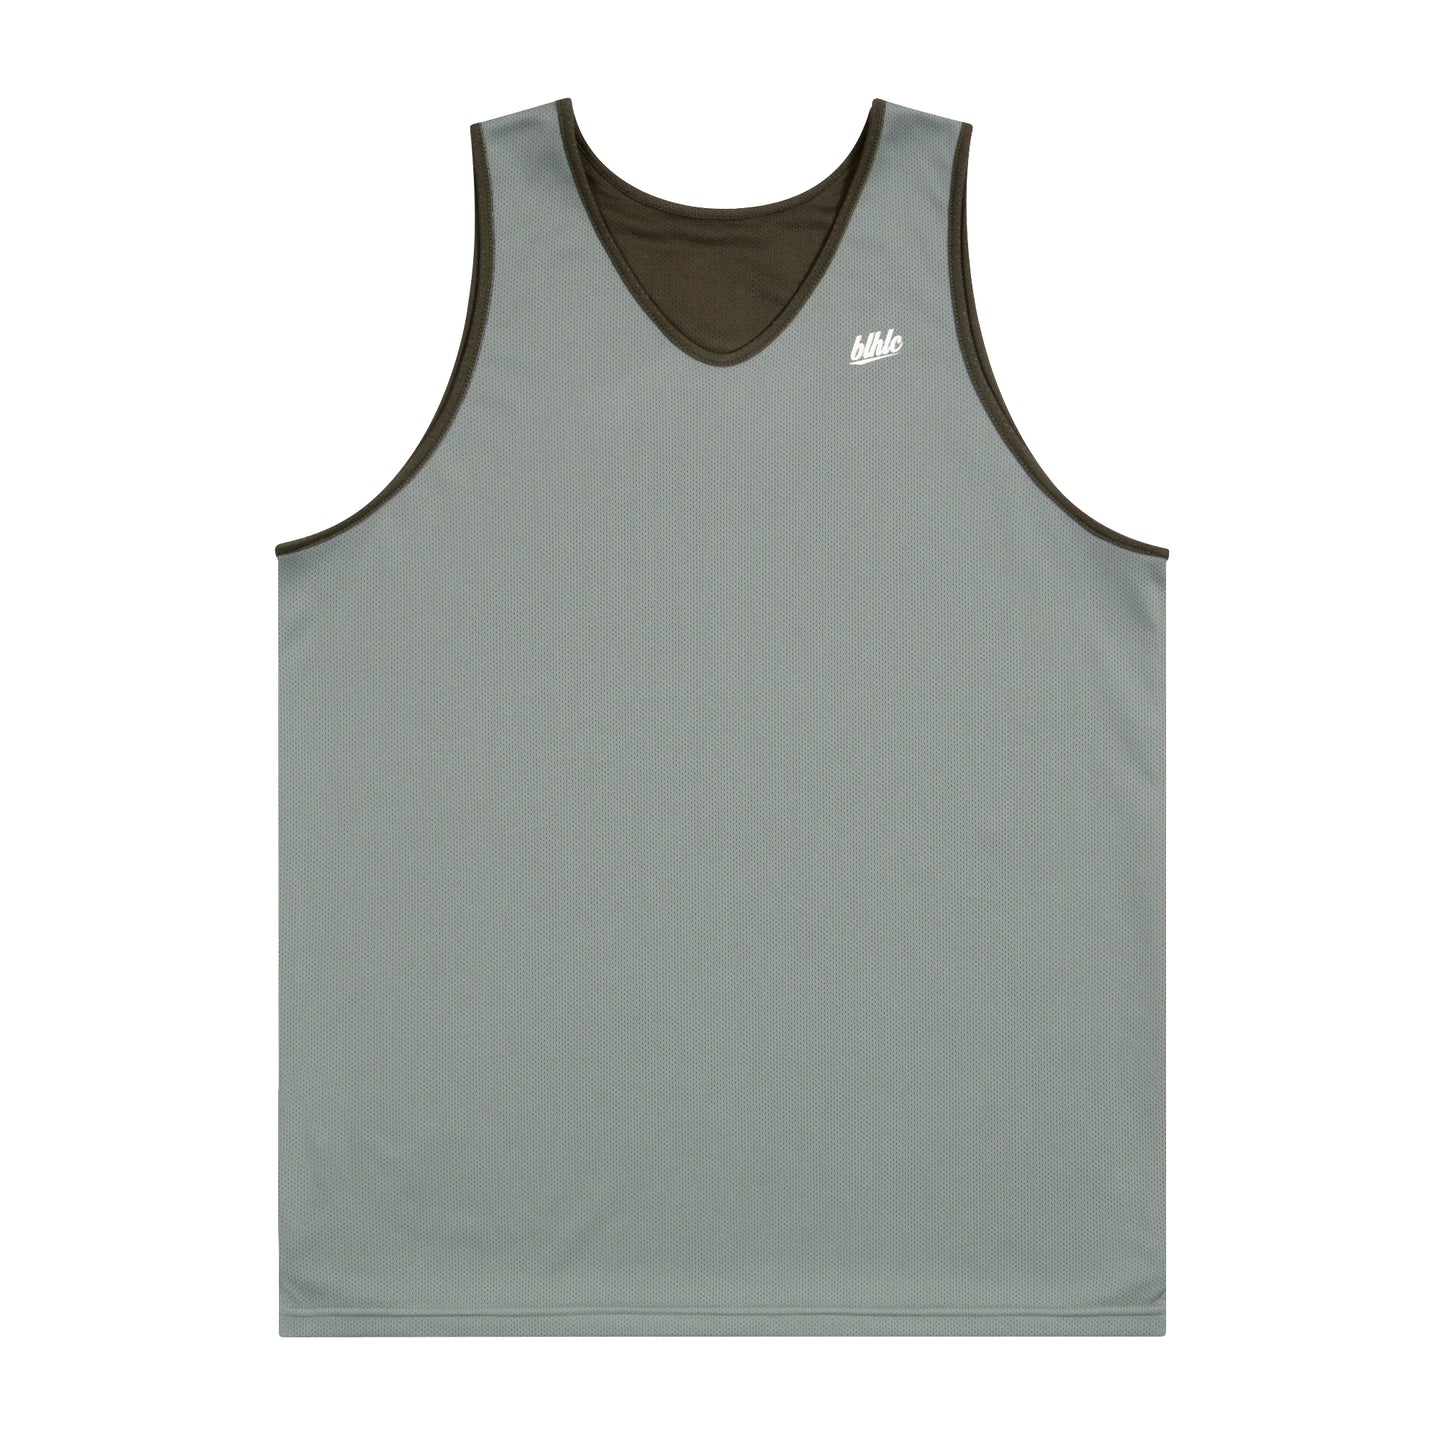 Basic Reversible Jersey (olive/gray)